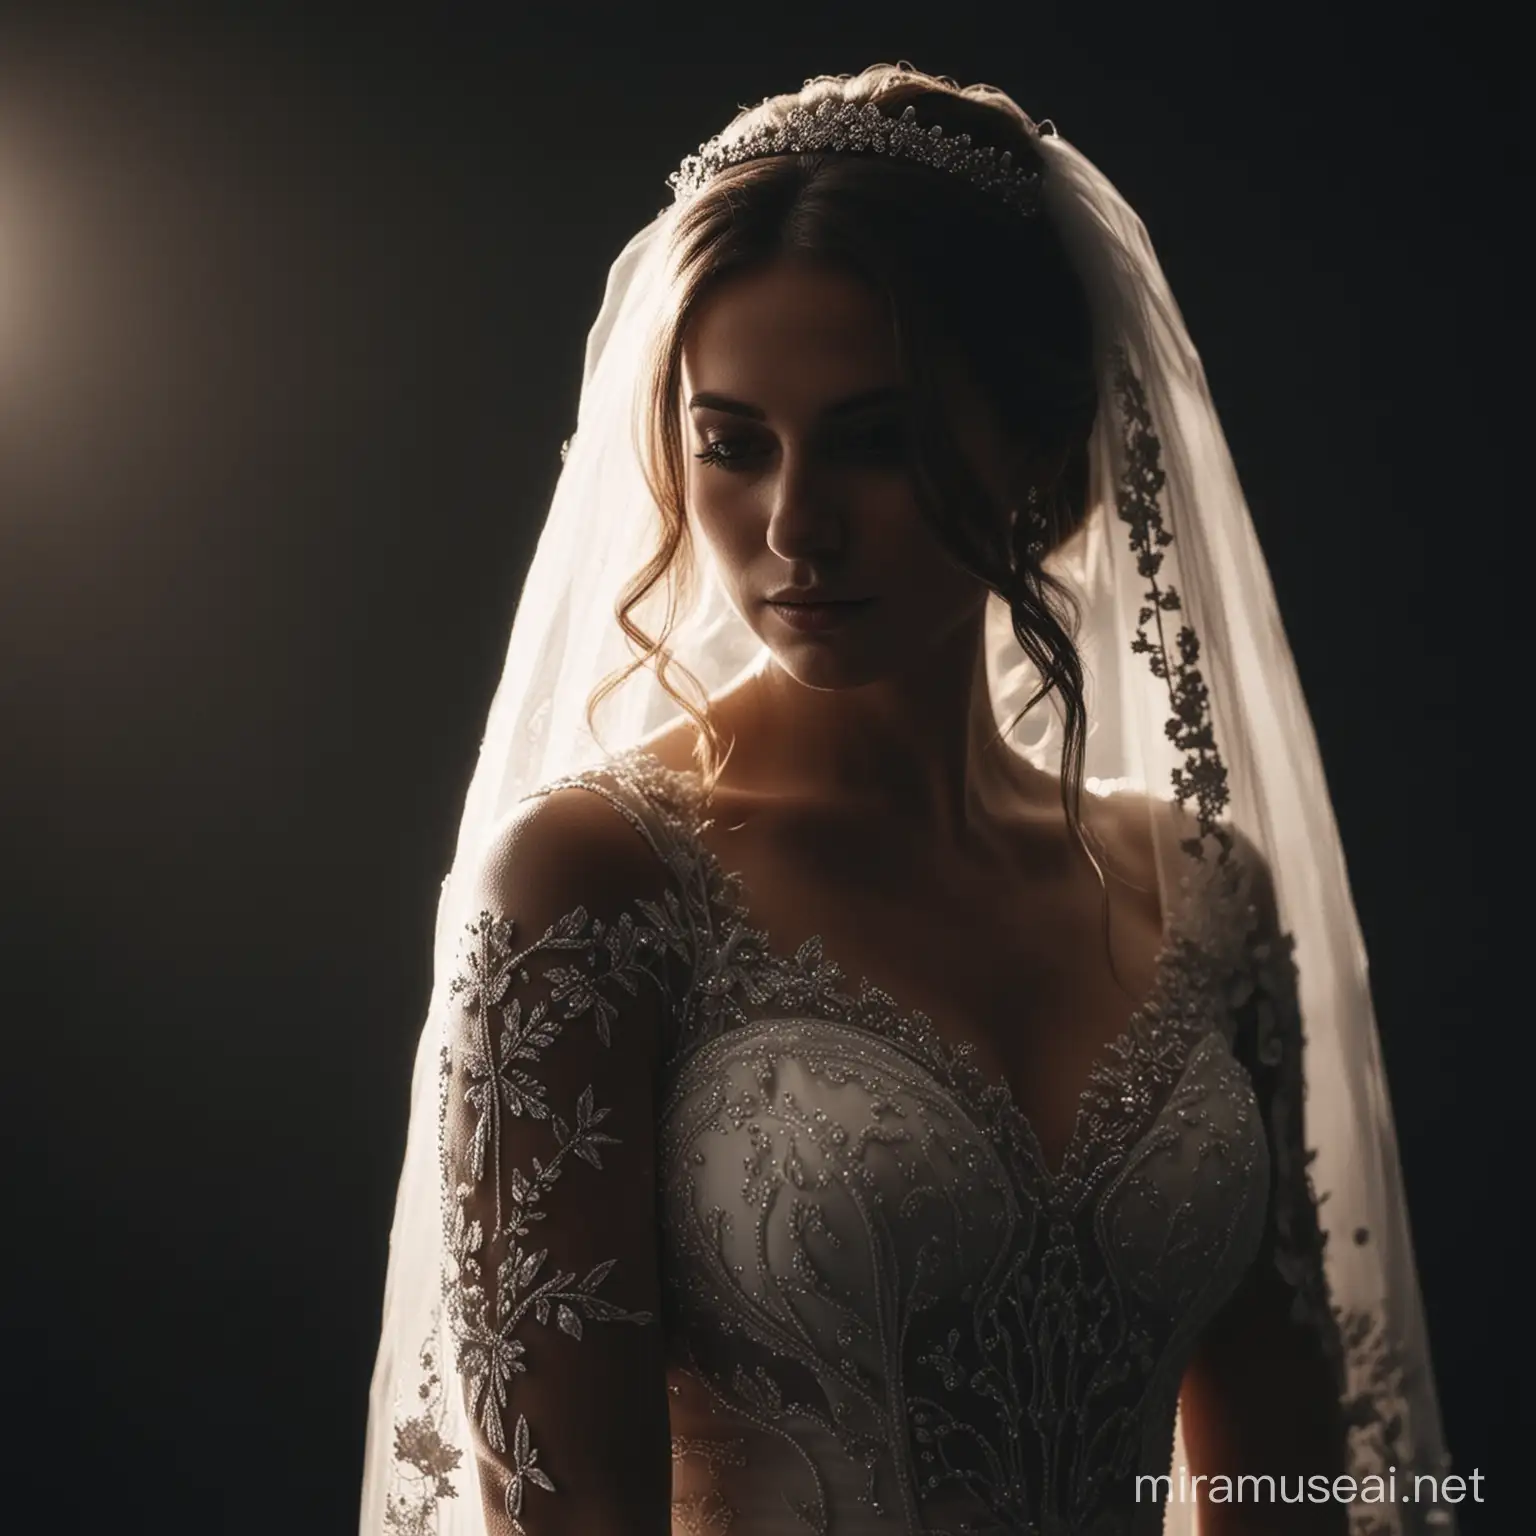 Elegant Faceless Bride in Cinematic Black Stunning Wedding Portrait